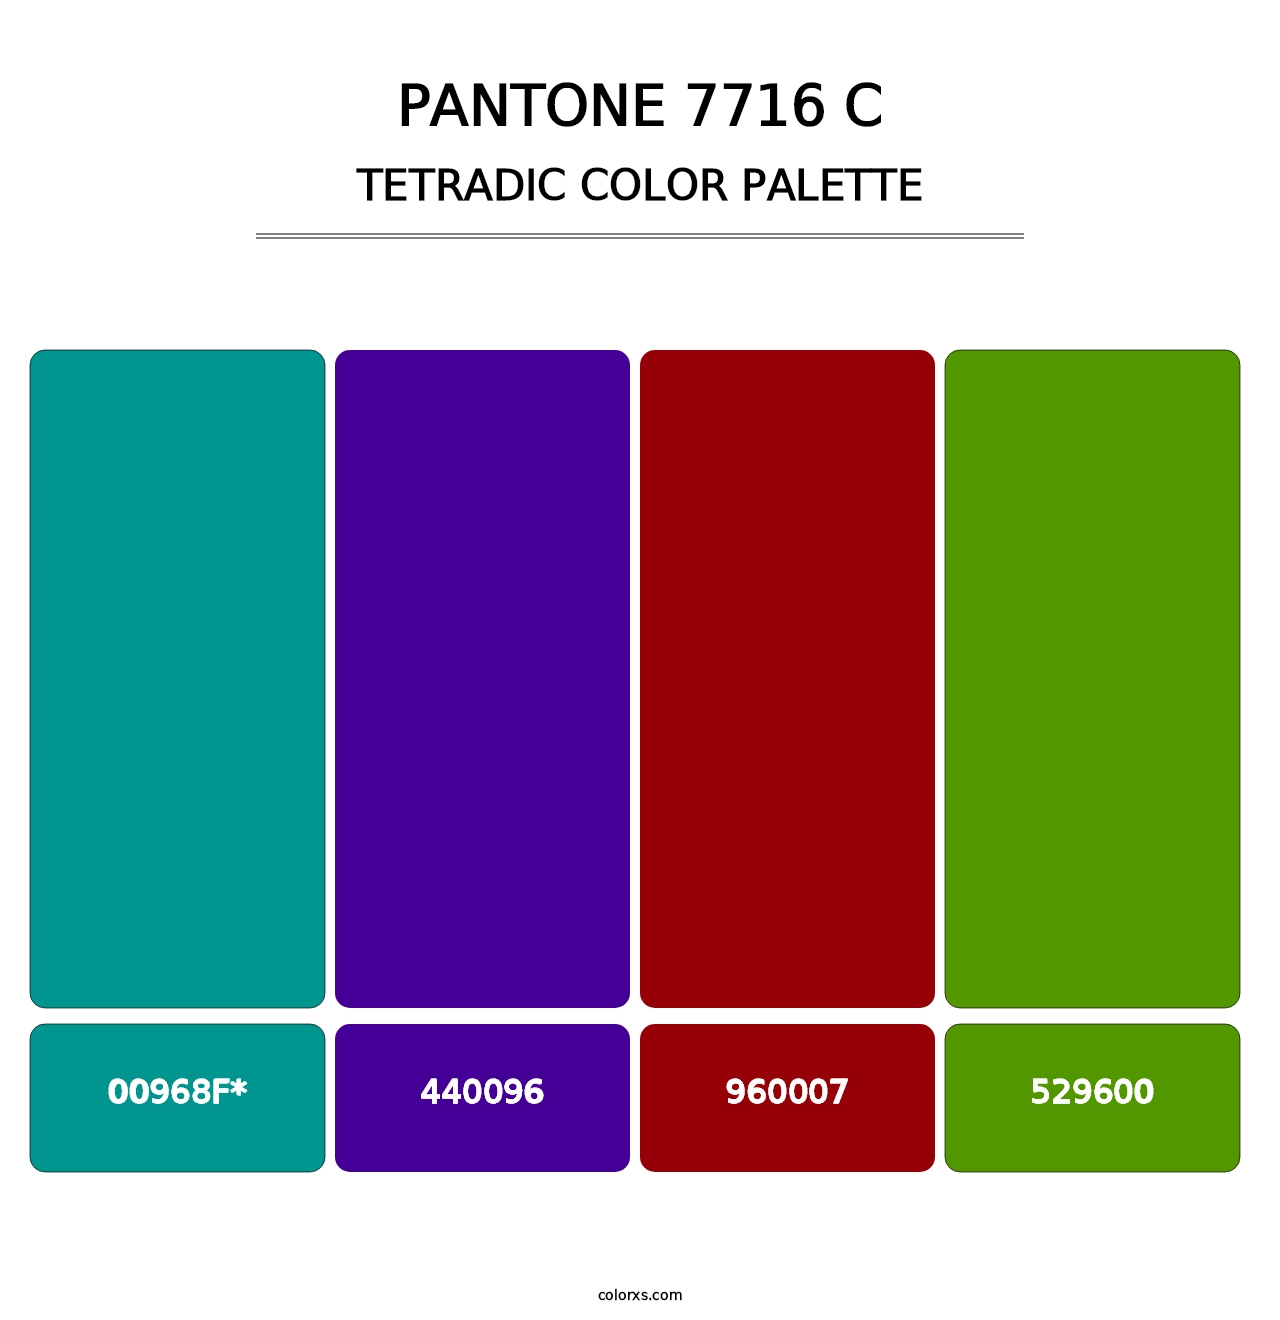 PANTONE 7716 C - Tetradic Color Palette